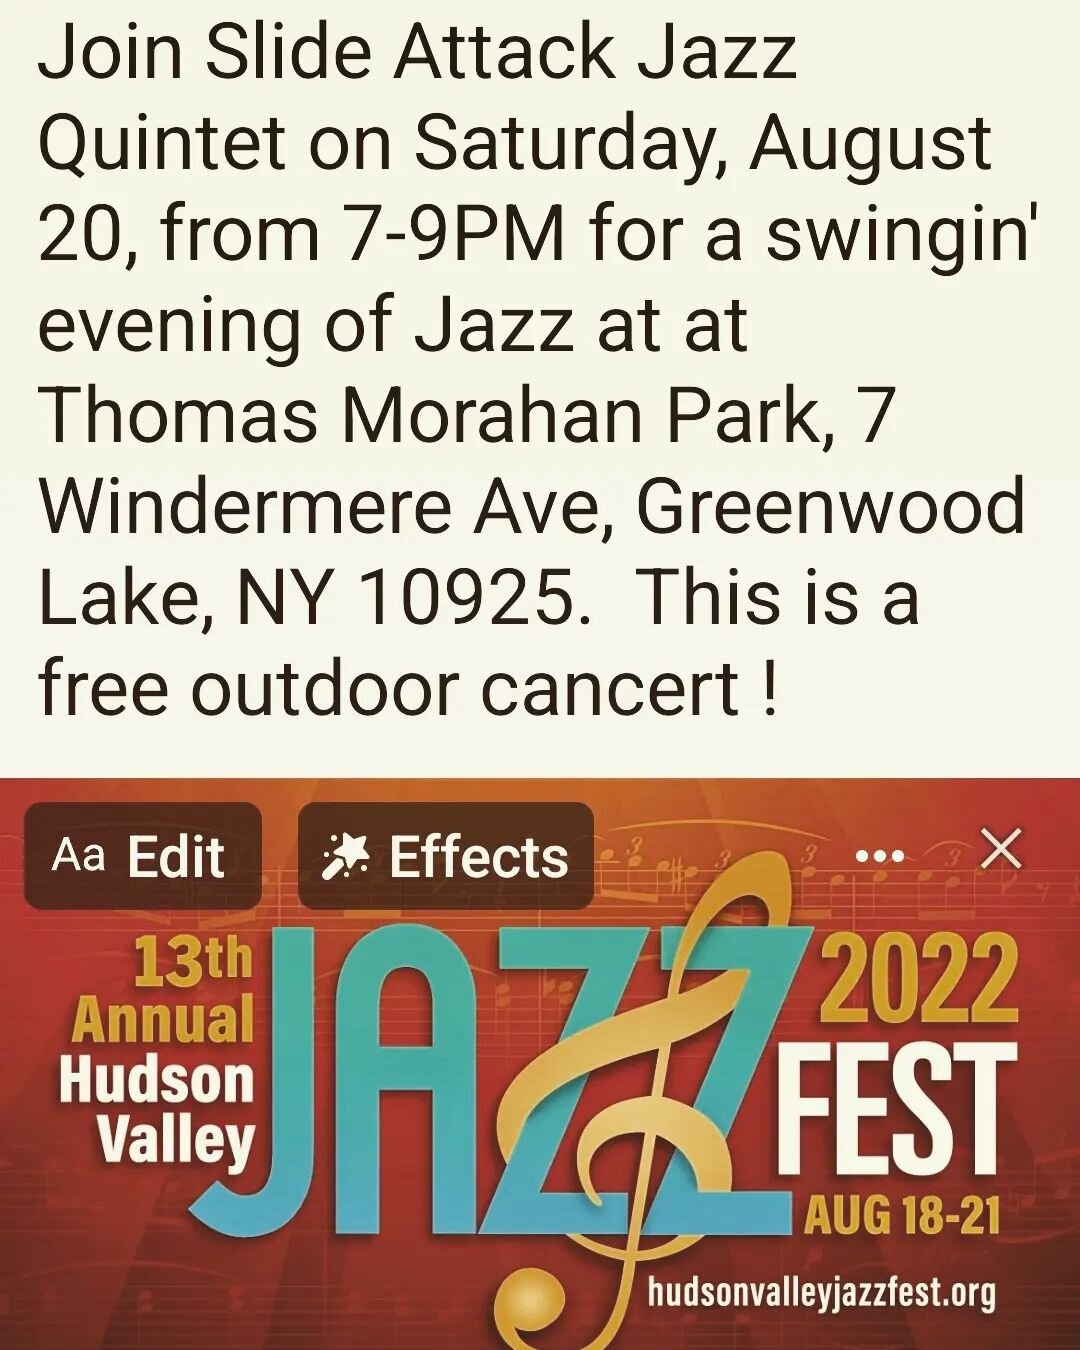 #slideattack #hudsonvalleyjazzfest #jazztrombone #jazzpoano #jazzbass #jazzdrums #bebop #latinjazz #jazzfusion #straightaheadjazz #jazzquintet #greenwoodlake